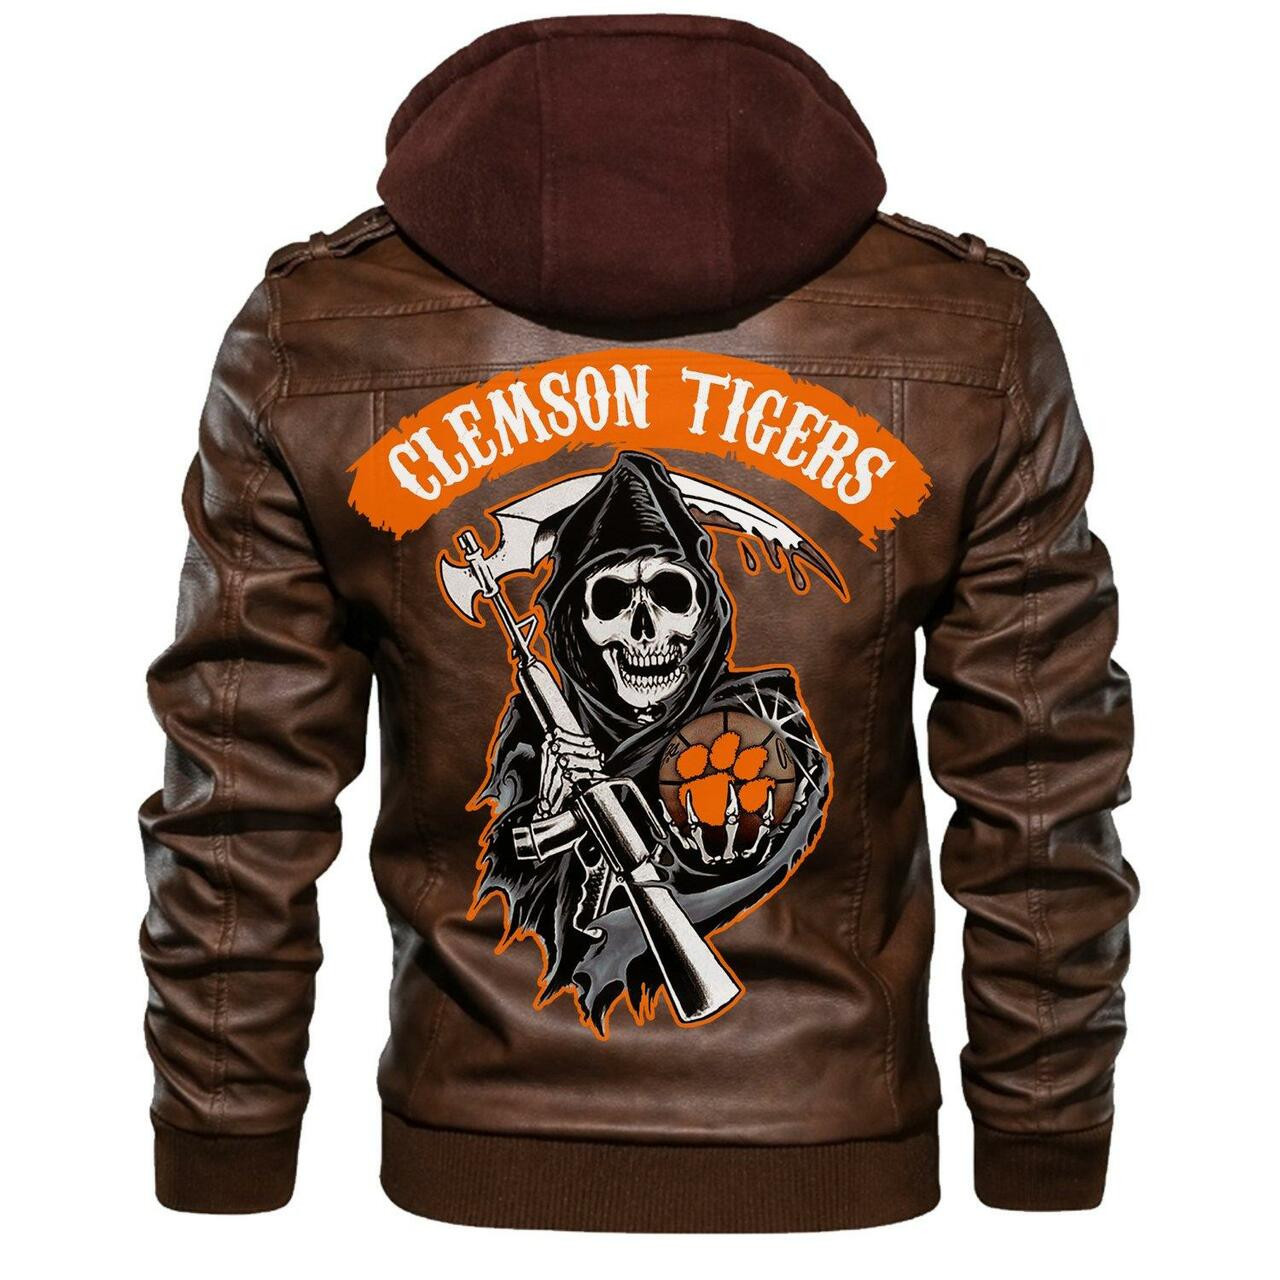 Top leather jacket Sells Best on Techcomshop 49